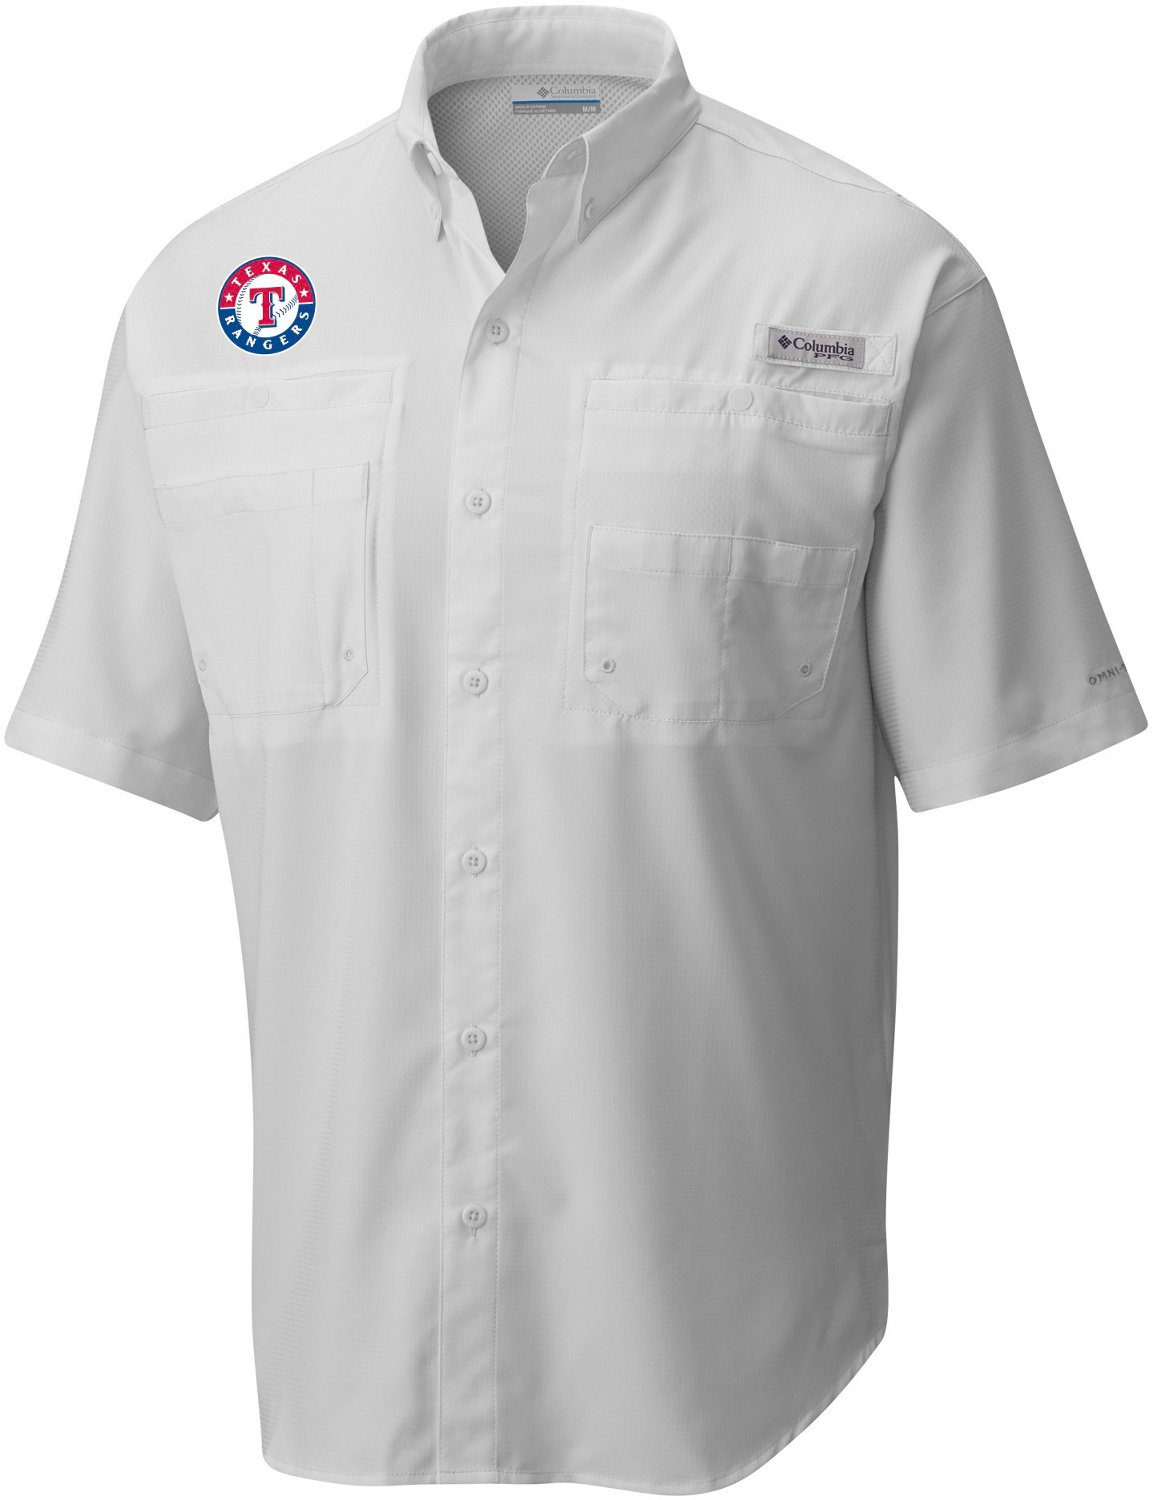 texas rangers columbia fishing shirt